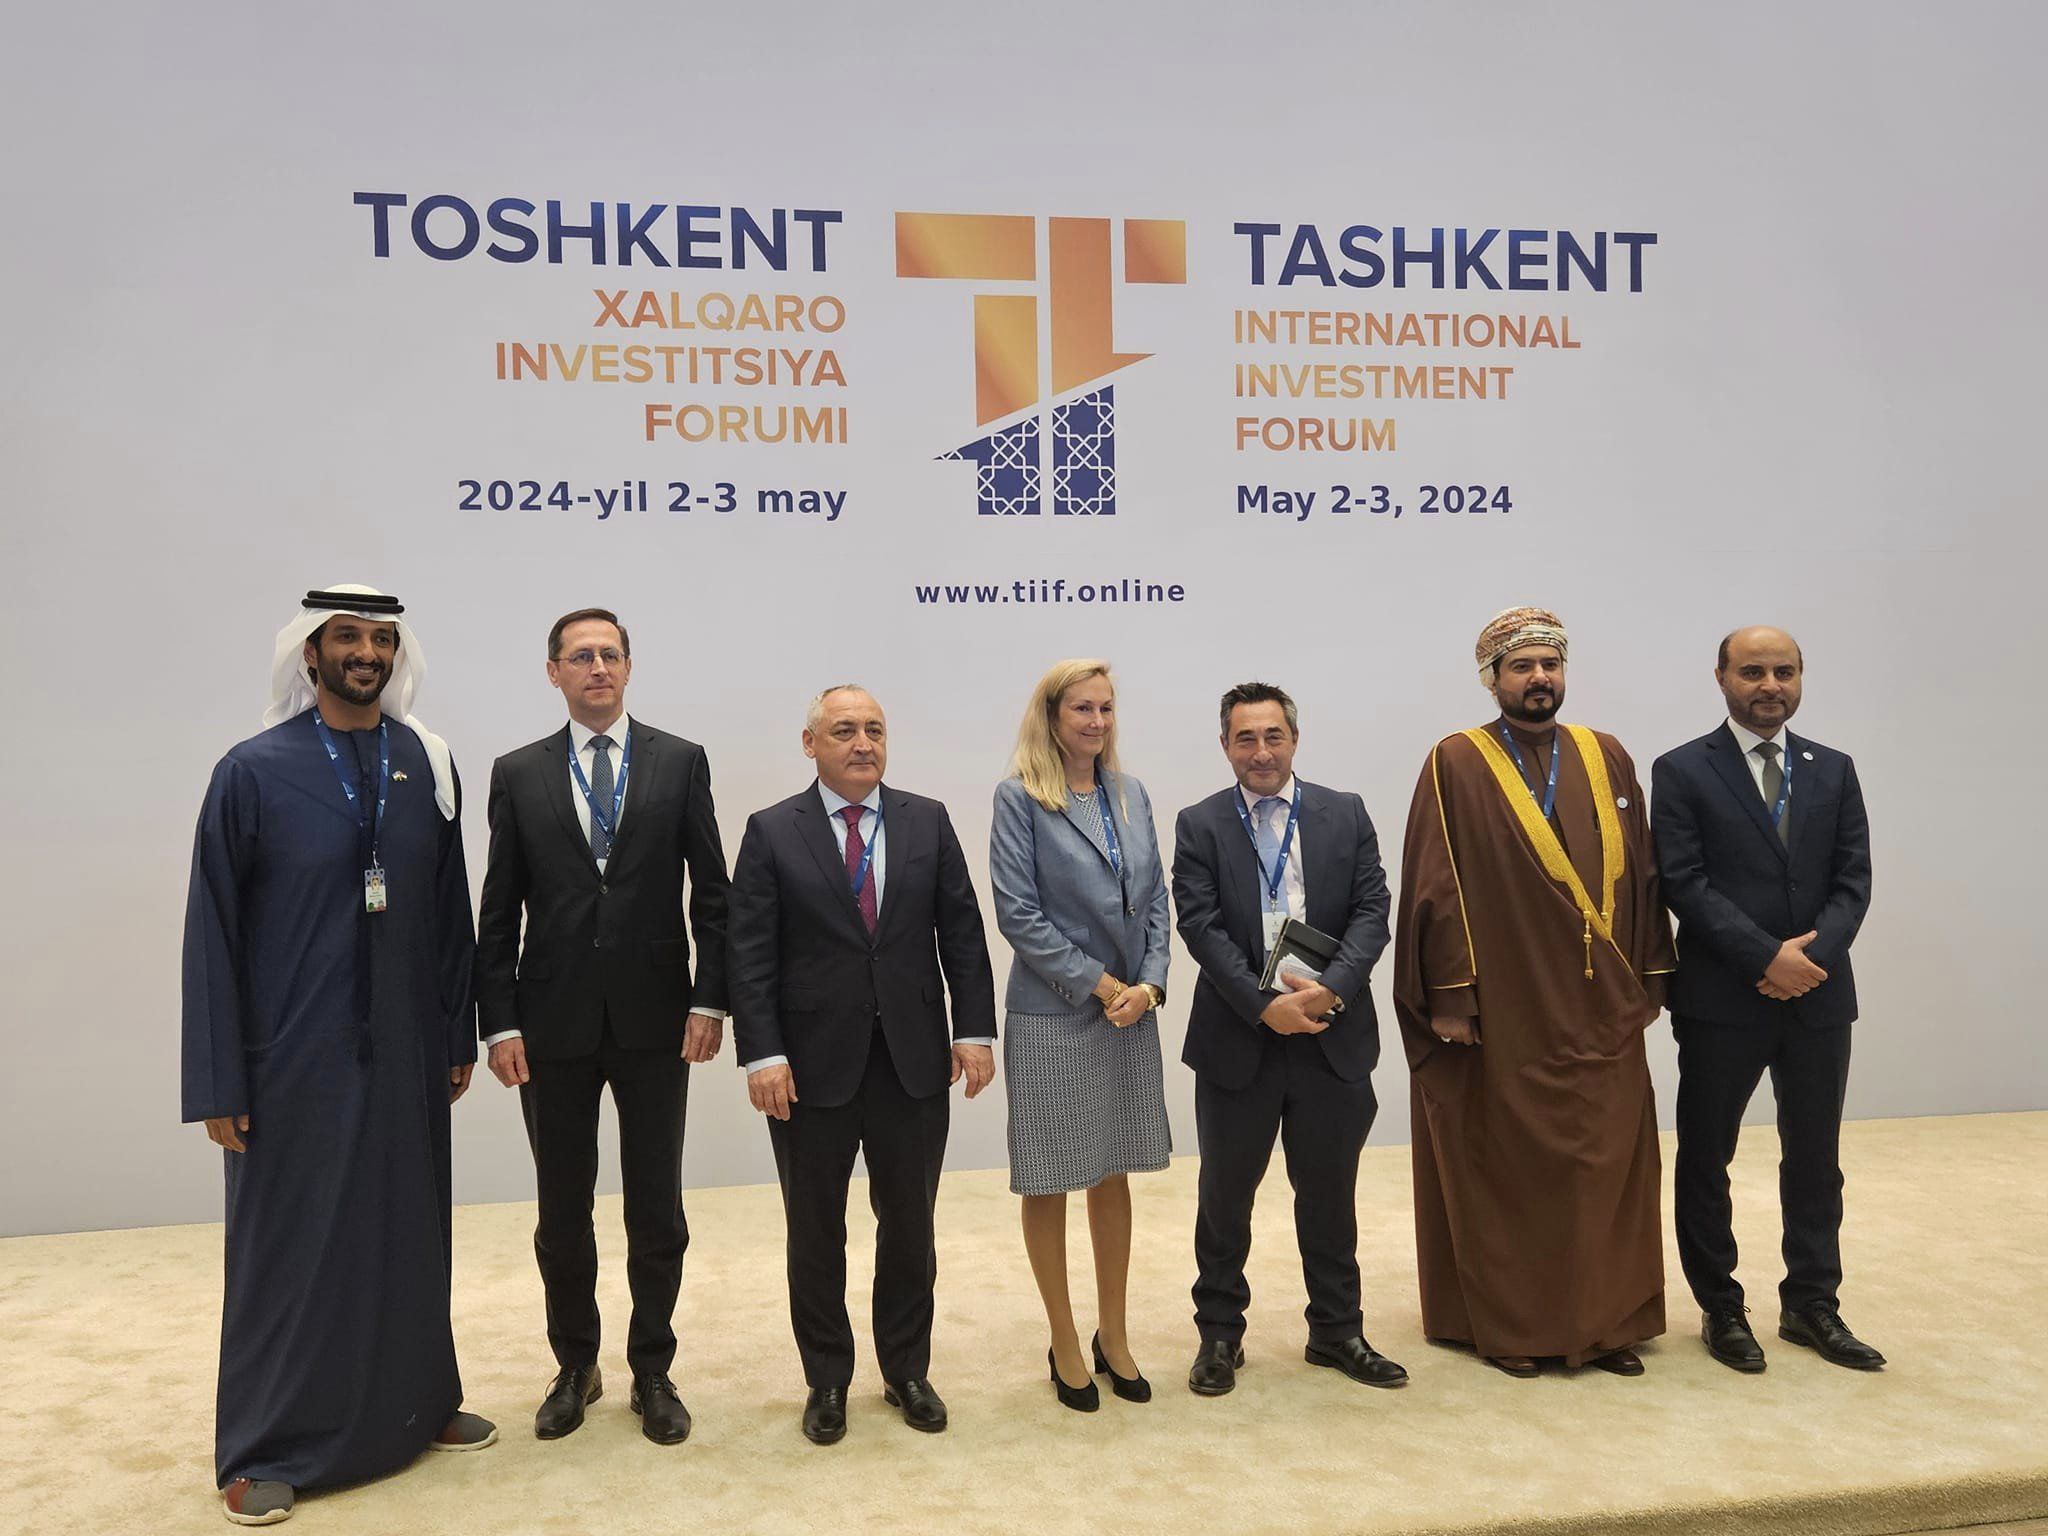 Taskent Nemzetközi Befektetési Fórumot (Tashkent International Investment Forum – TIIF)